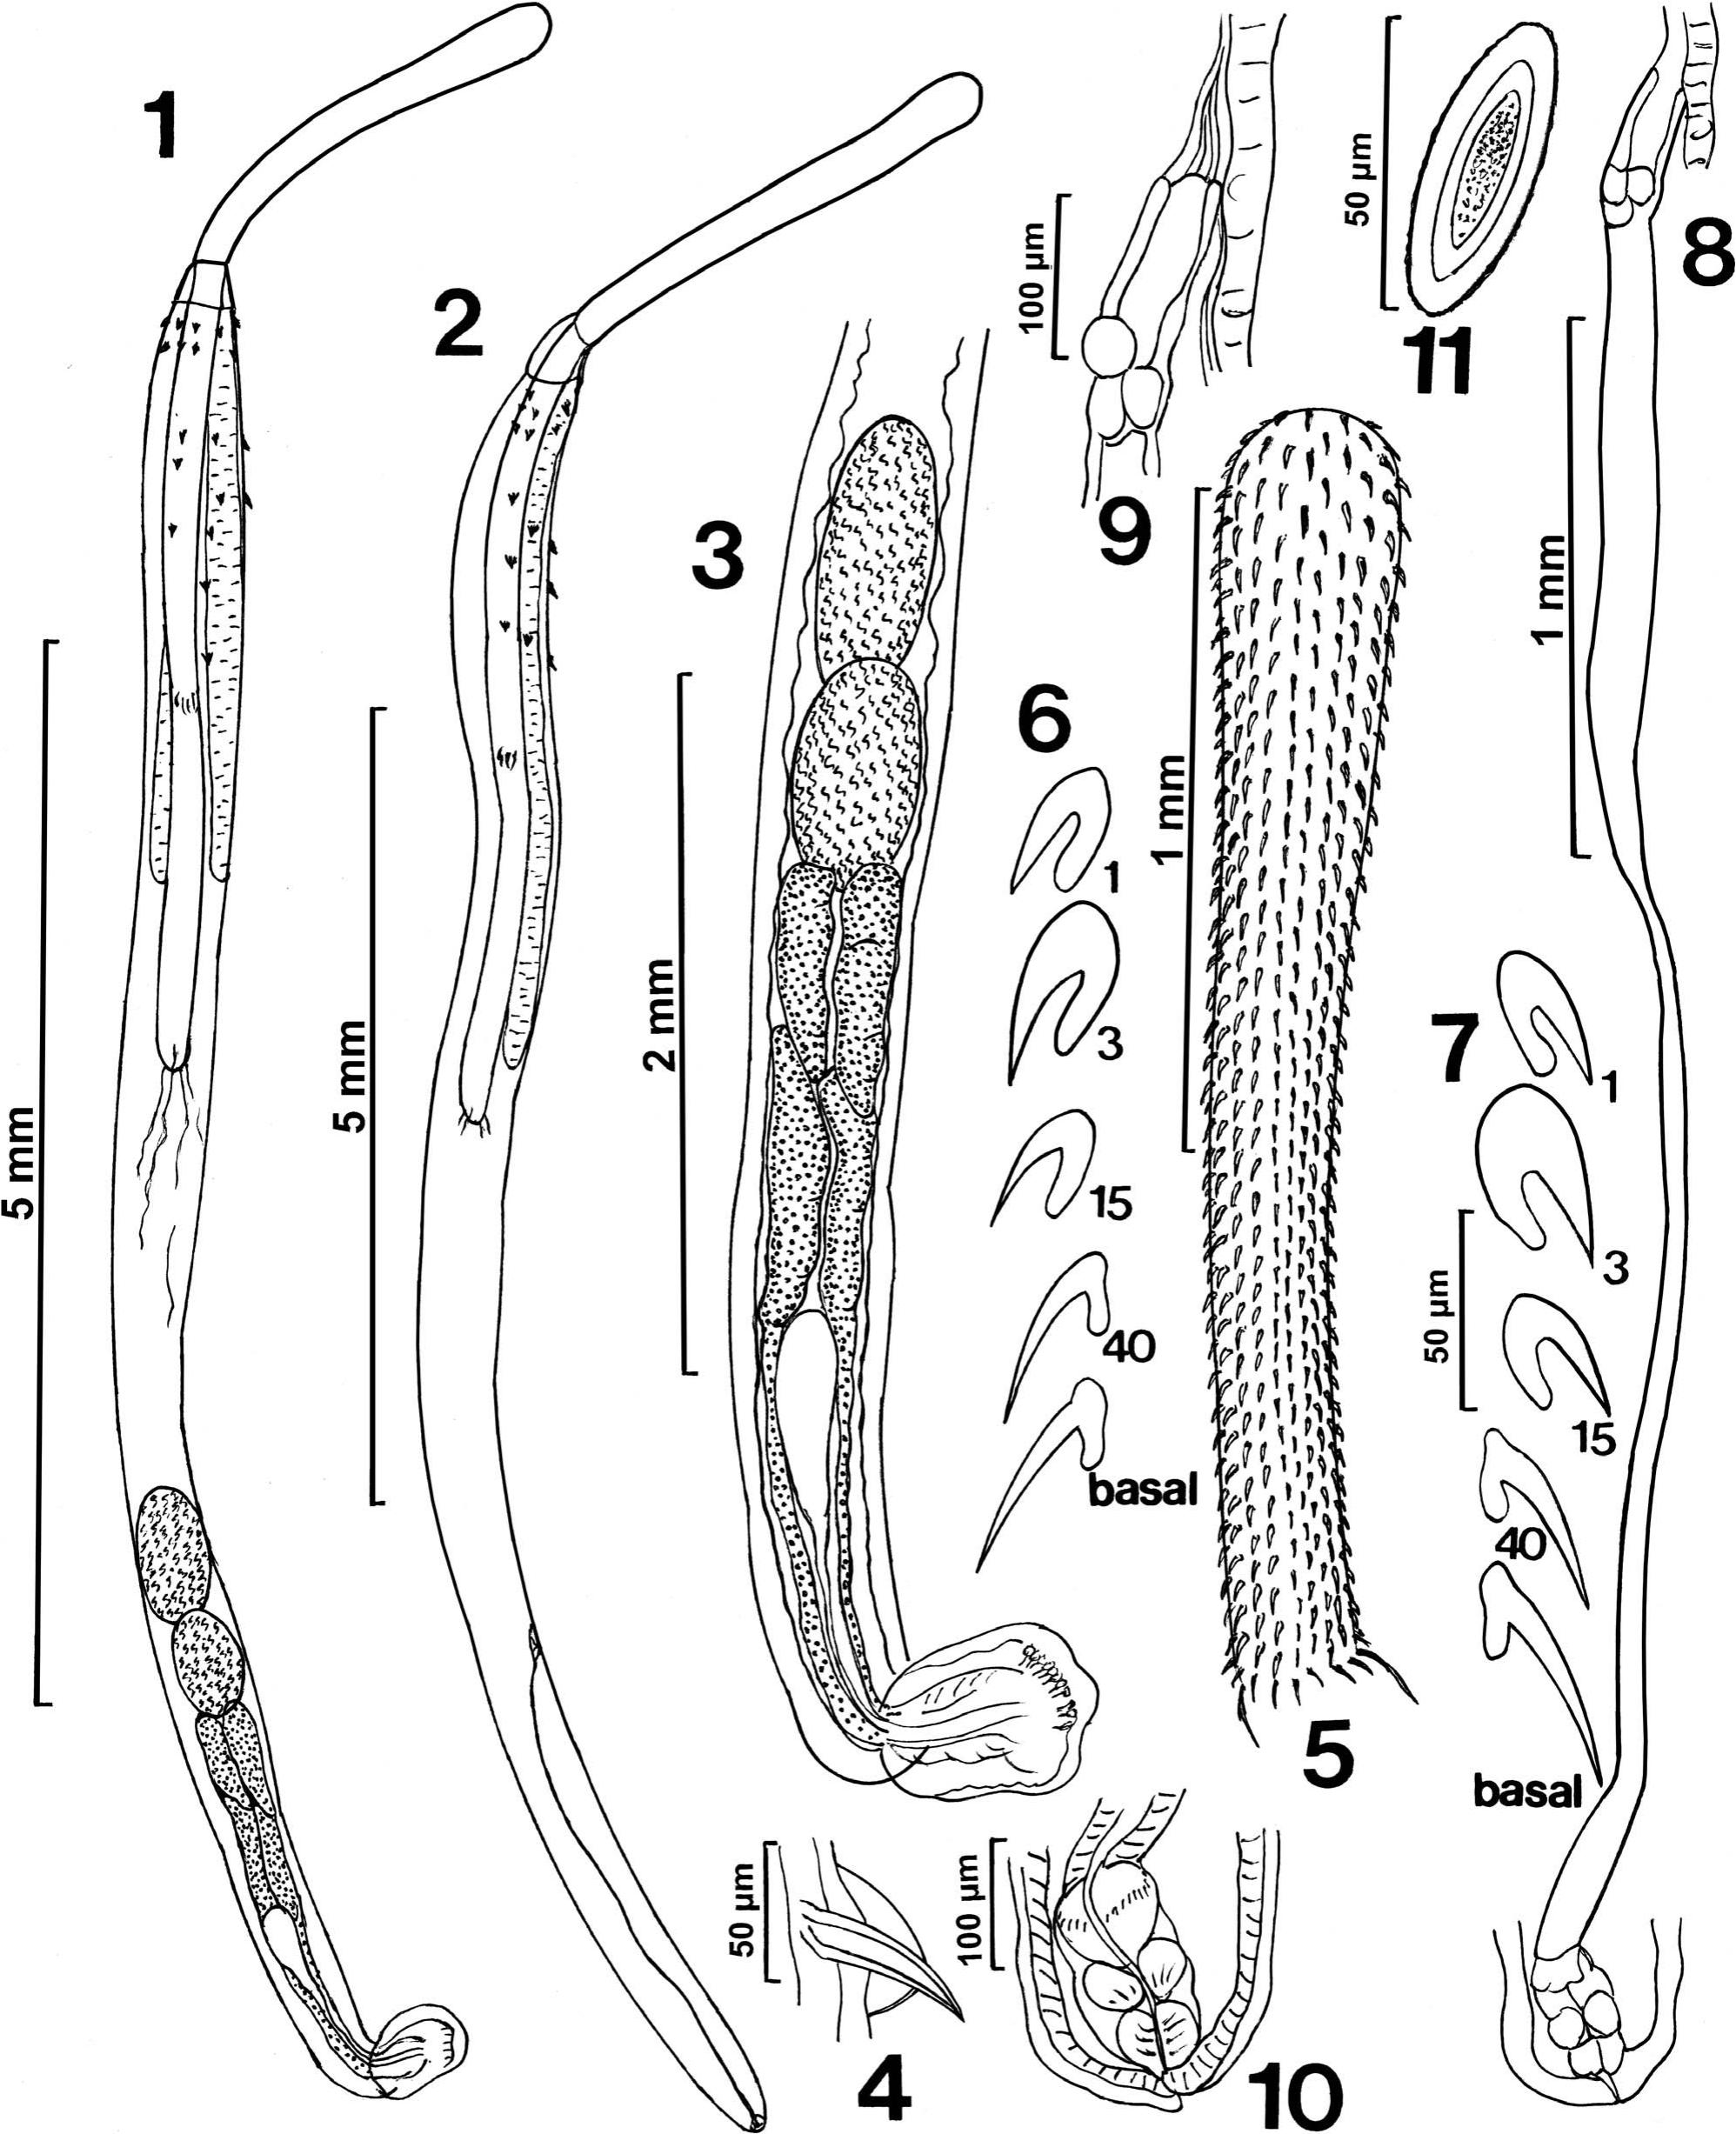 Morphological And Molecular Description Of Rhadinorhynchus Hiansi Soota And Bhattacharya 1981 Acanthocephala Rhadinorhynchidae From Marine Fish Off The Pacific Coast Of Vietnam